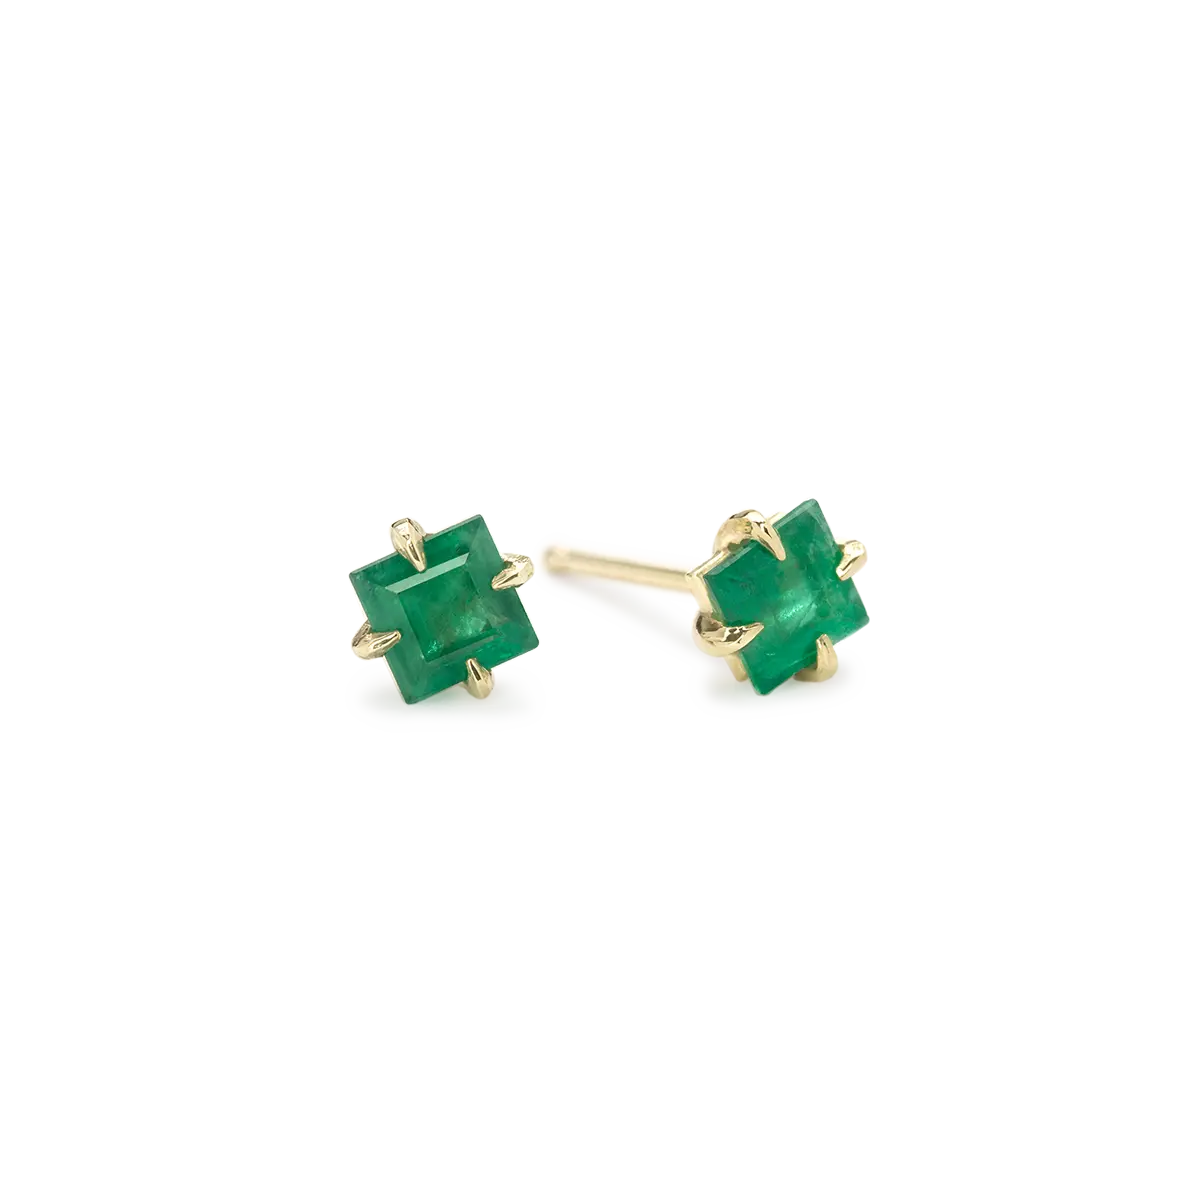 Martini style princess cut emerald stud earrings set in 14k yellow gold.   .75ct emerald.   Designed by ILA